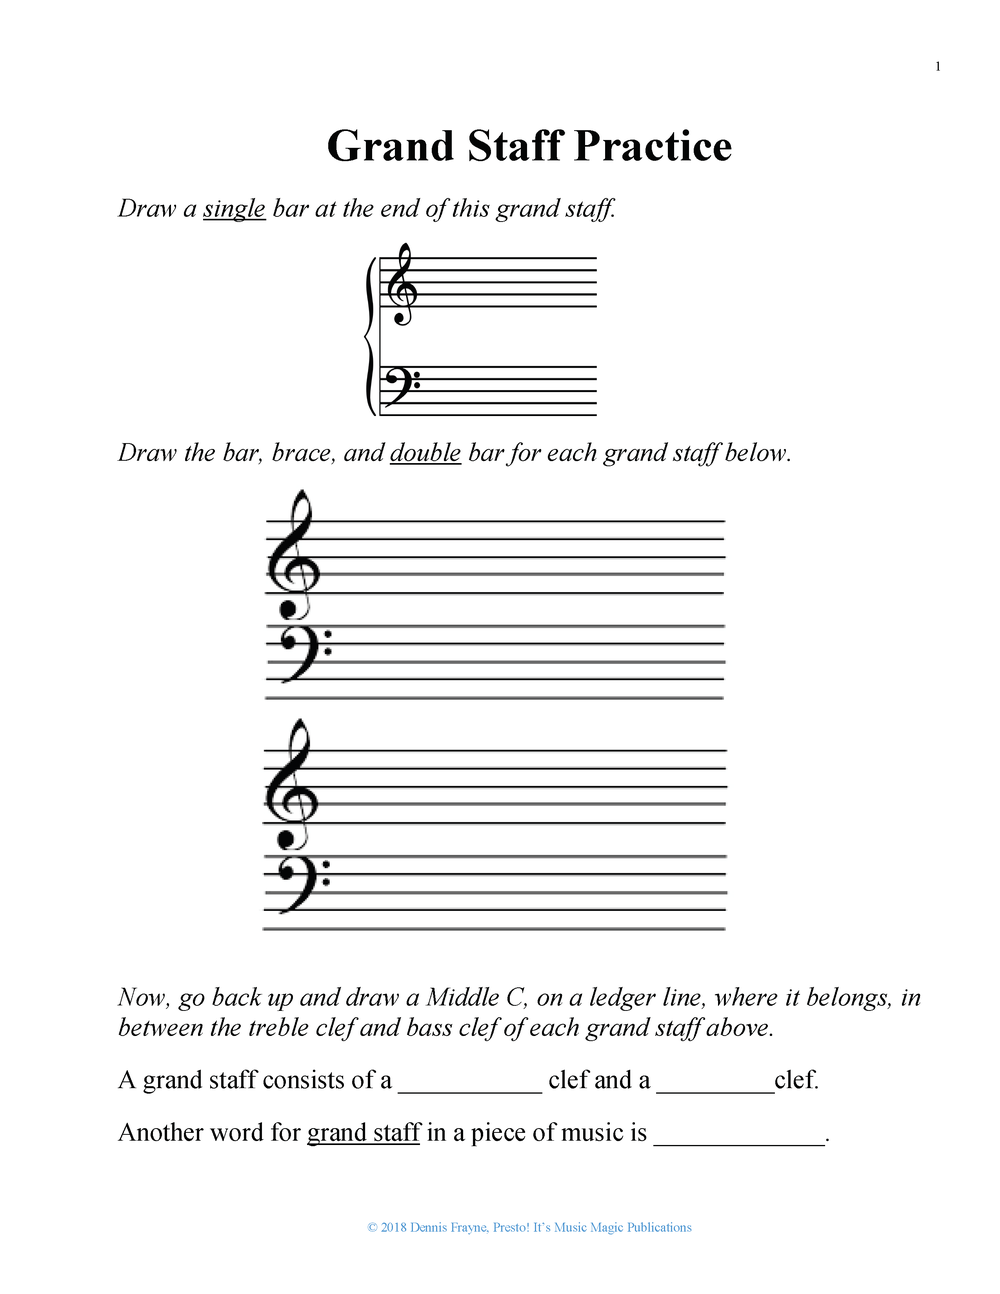 Free Printable Music Note Naming Worksheets Presto It S Music Magic Publishing